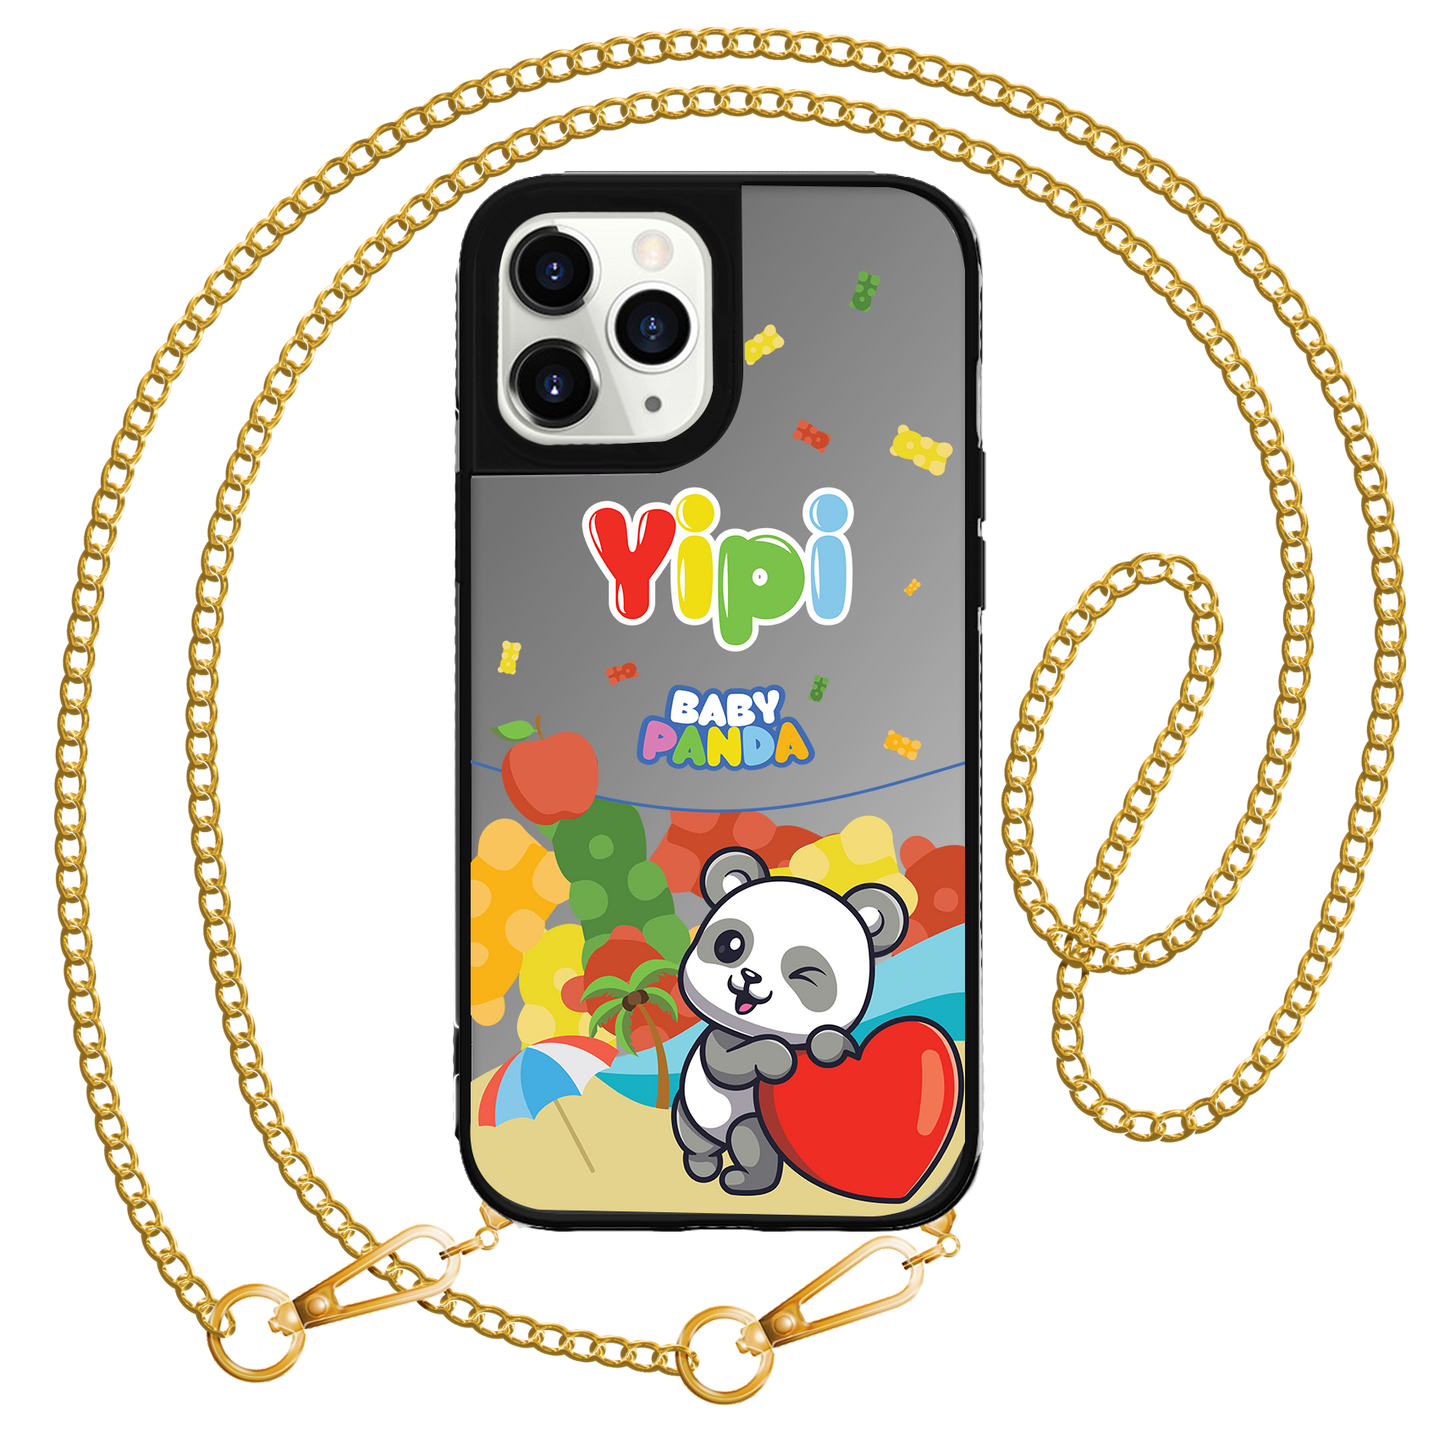 iPhone Mirror Grip Case - Yipi Baby Panda